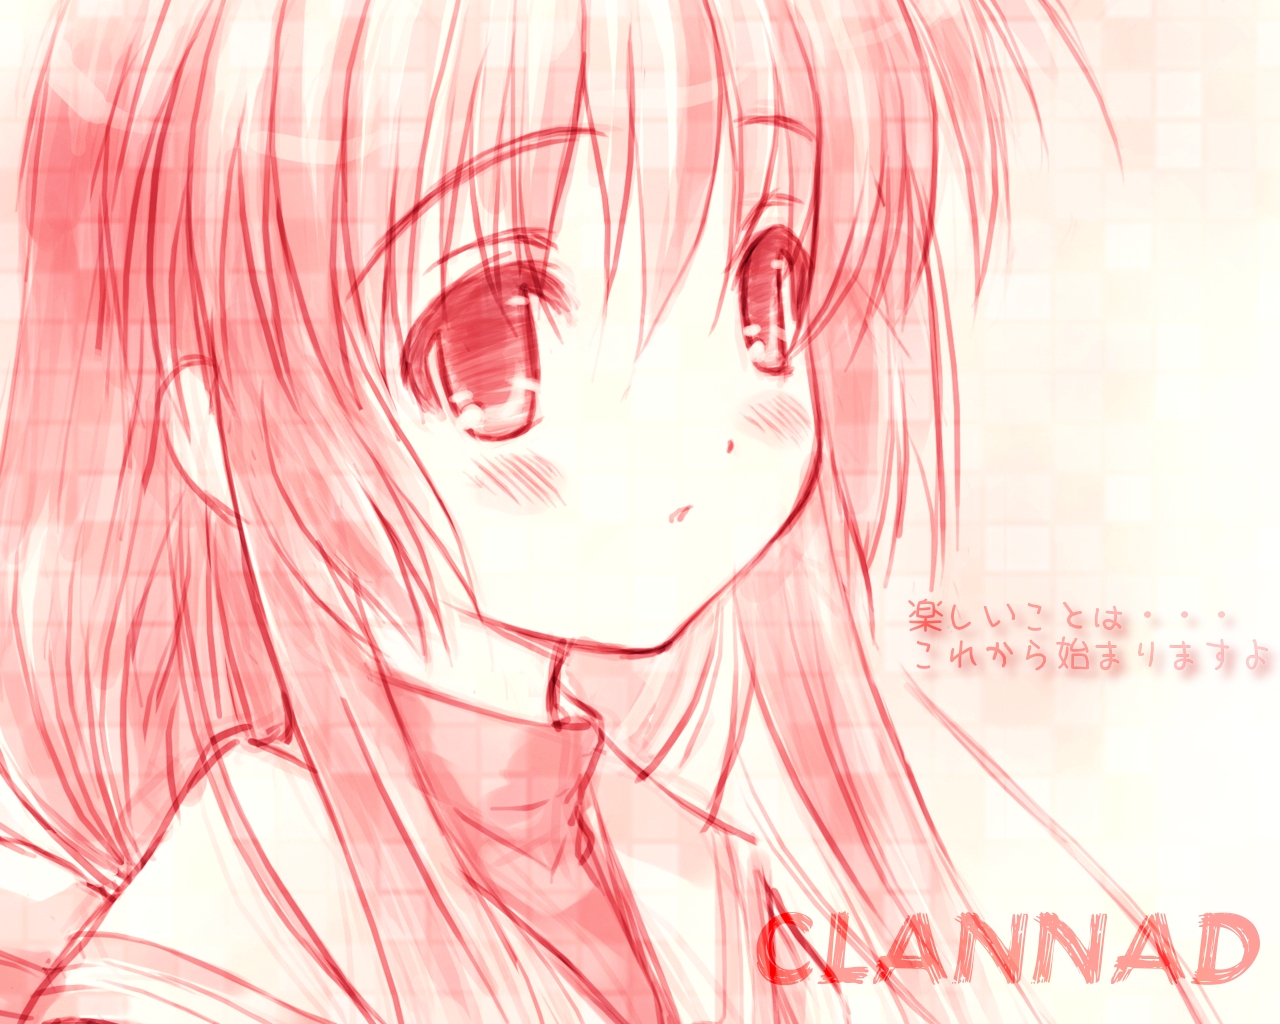 Free download wallpaper Anime, Clannad, Fuuko Ibuki on your PC desktop